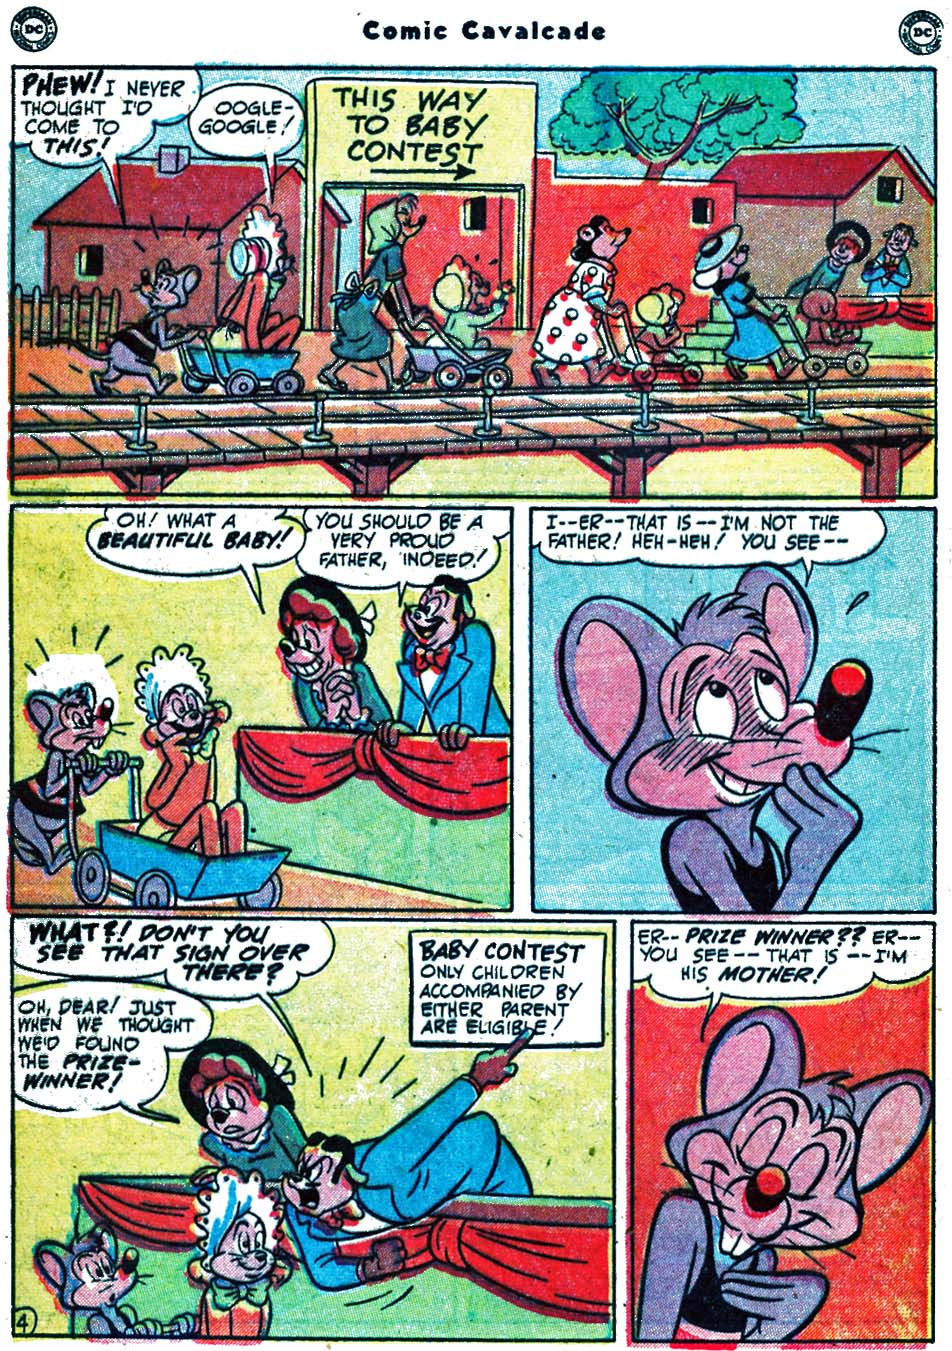 Comic Cavalcade issue 42 - Page 22